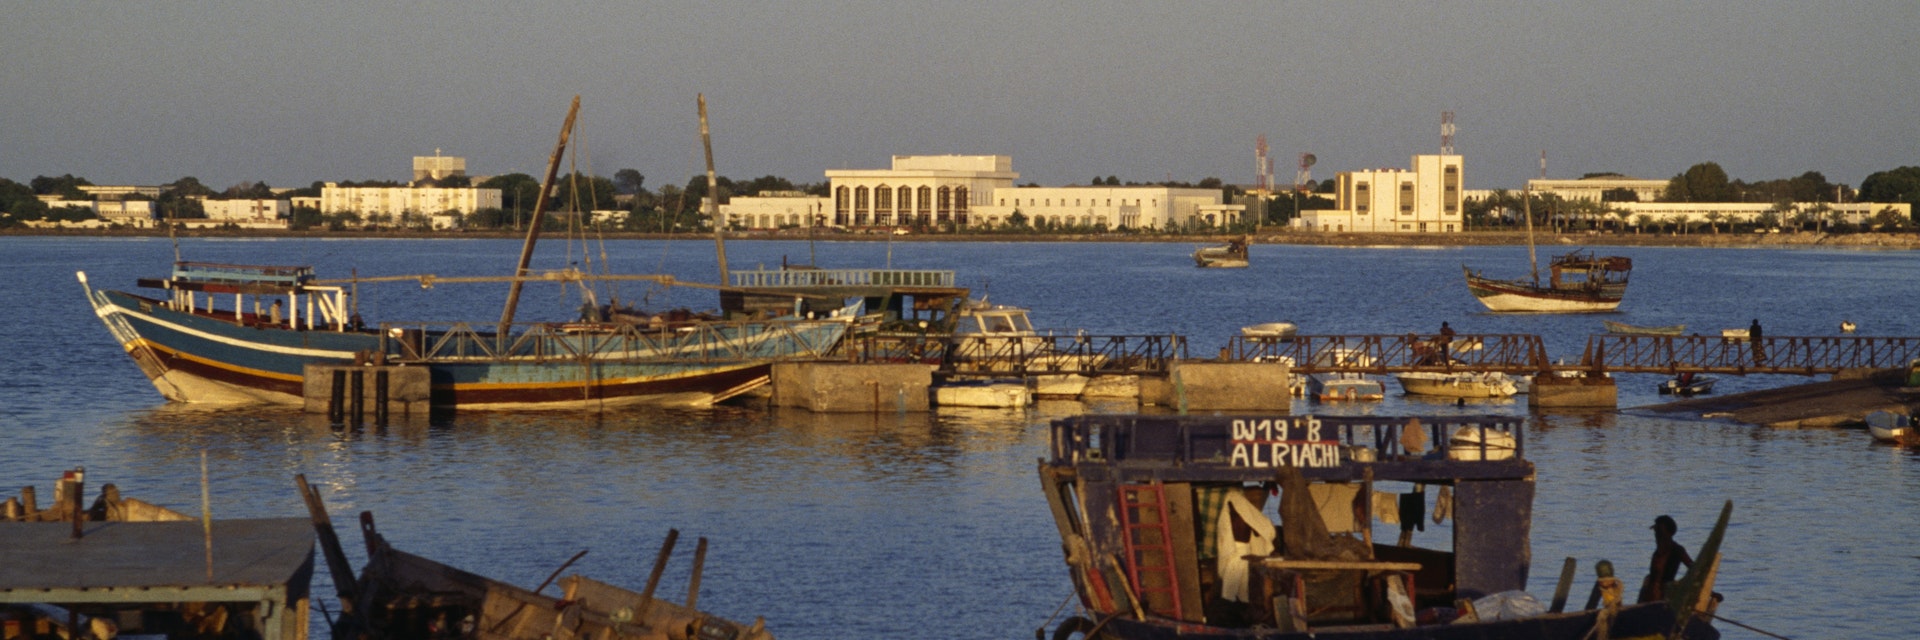 DJIBOUTI - MARCH 23: The old port of Djibouti, Republic of Djibouti. (Photo by DeAgostini/Getty Images)